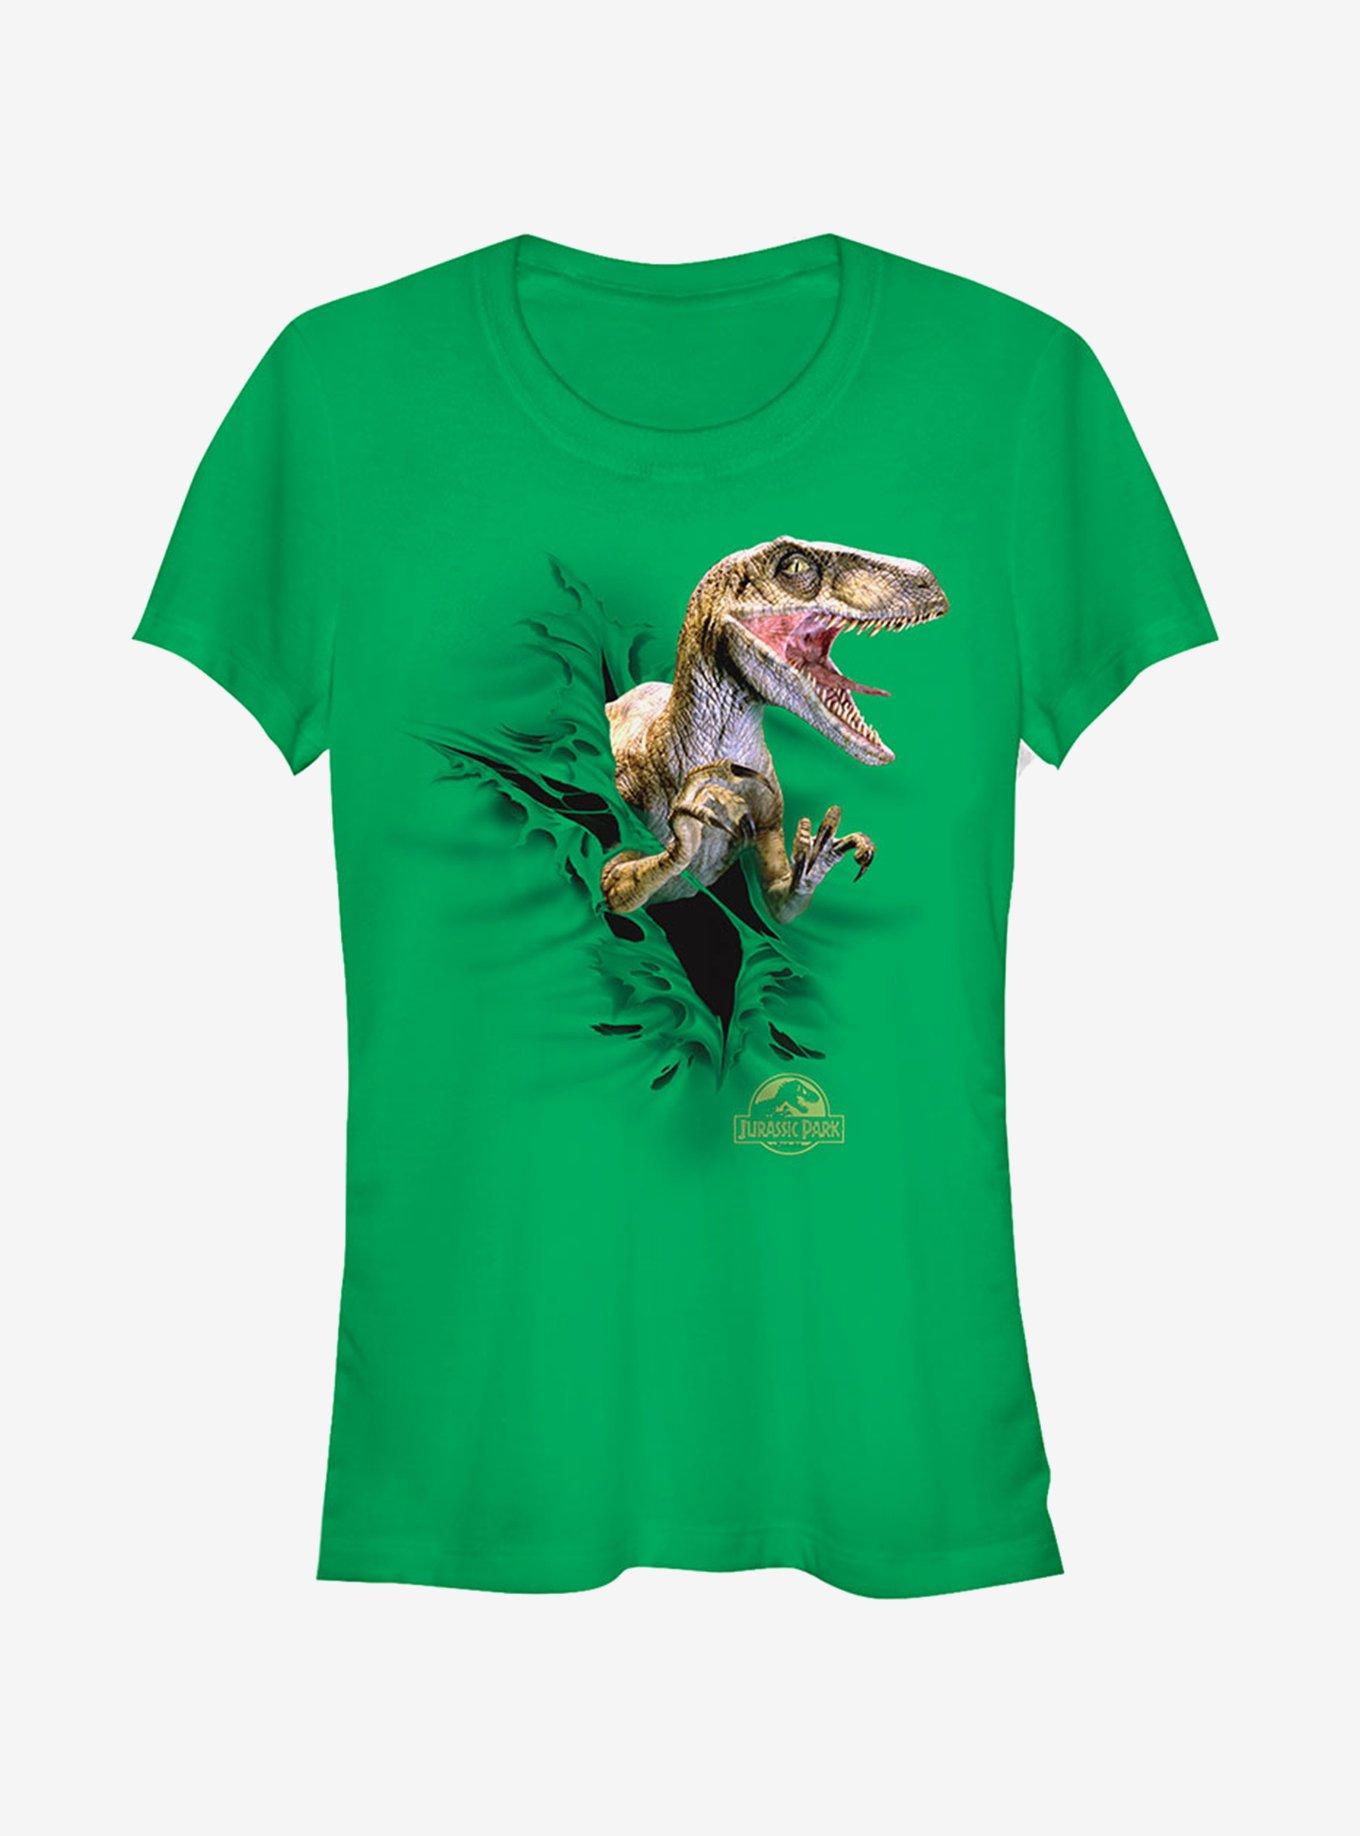 Velociraptor Tear Girls T-Shirt, KELLY, hi-res